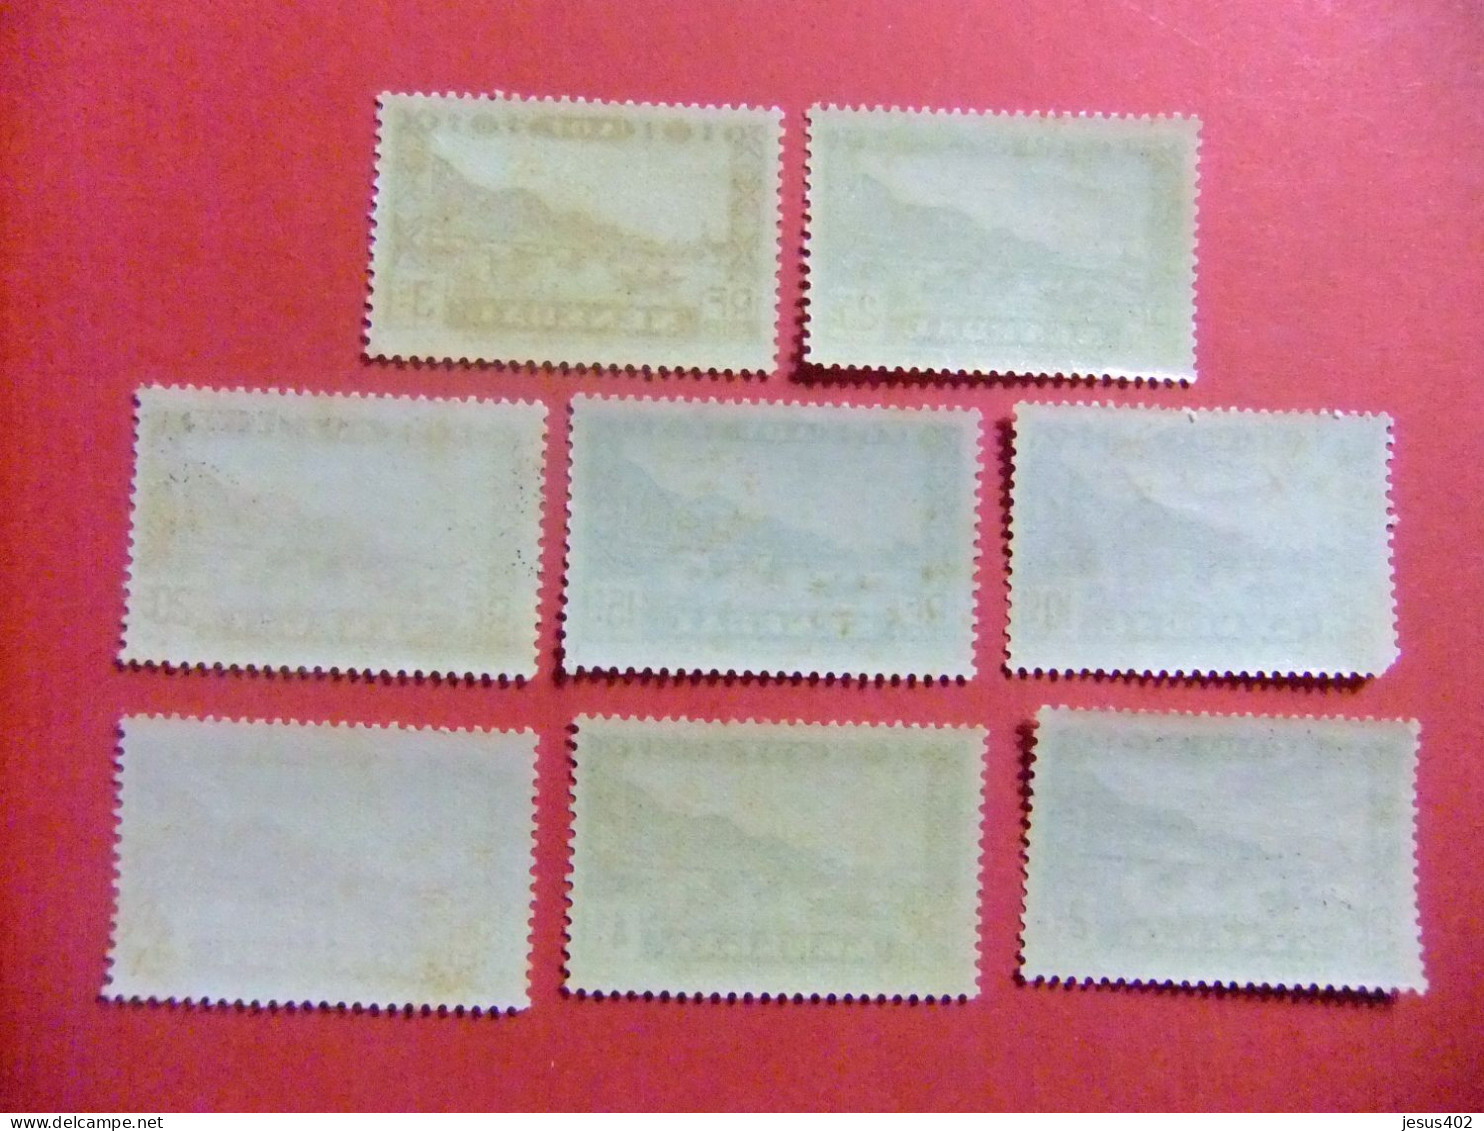 55 SENEGAL 1935 / PUENTE FAIDHERBE / YVERT 115 / 121 + 160 MNH - Used Stamps